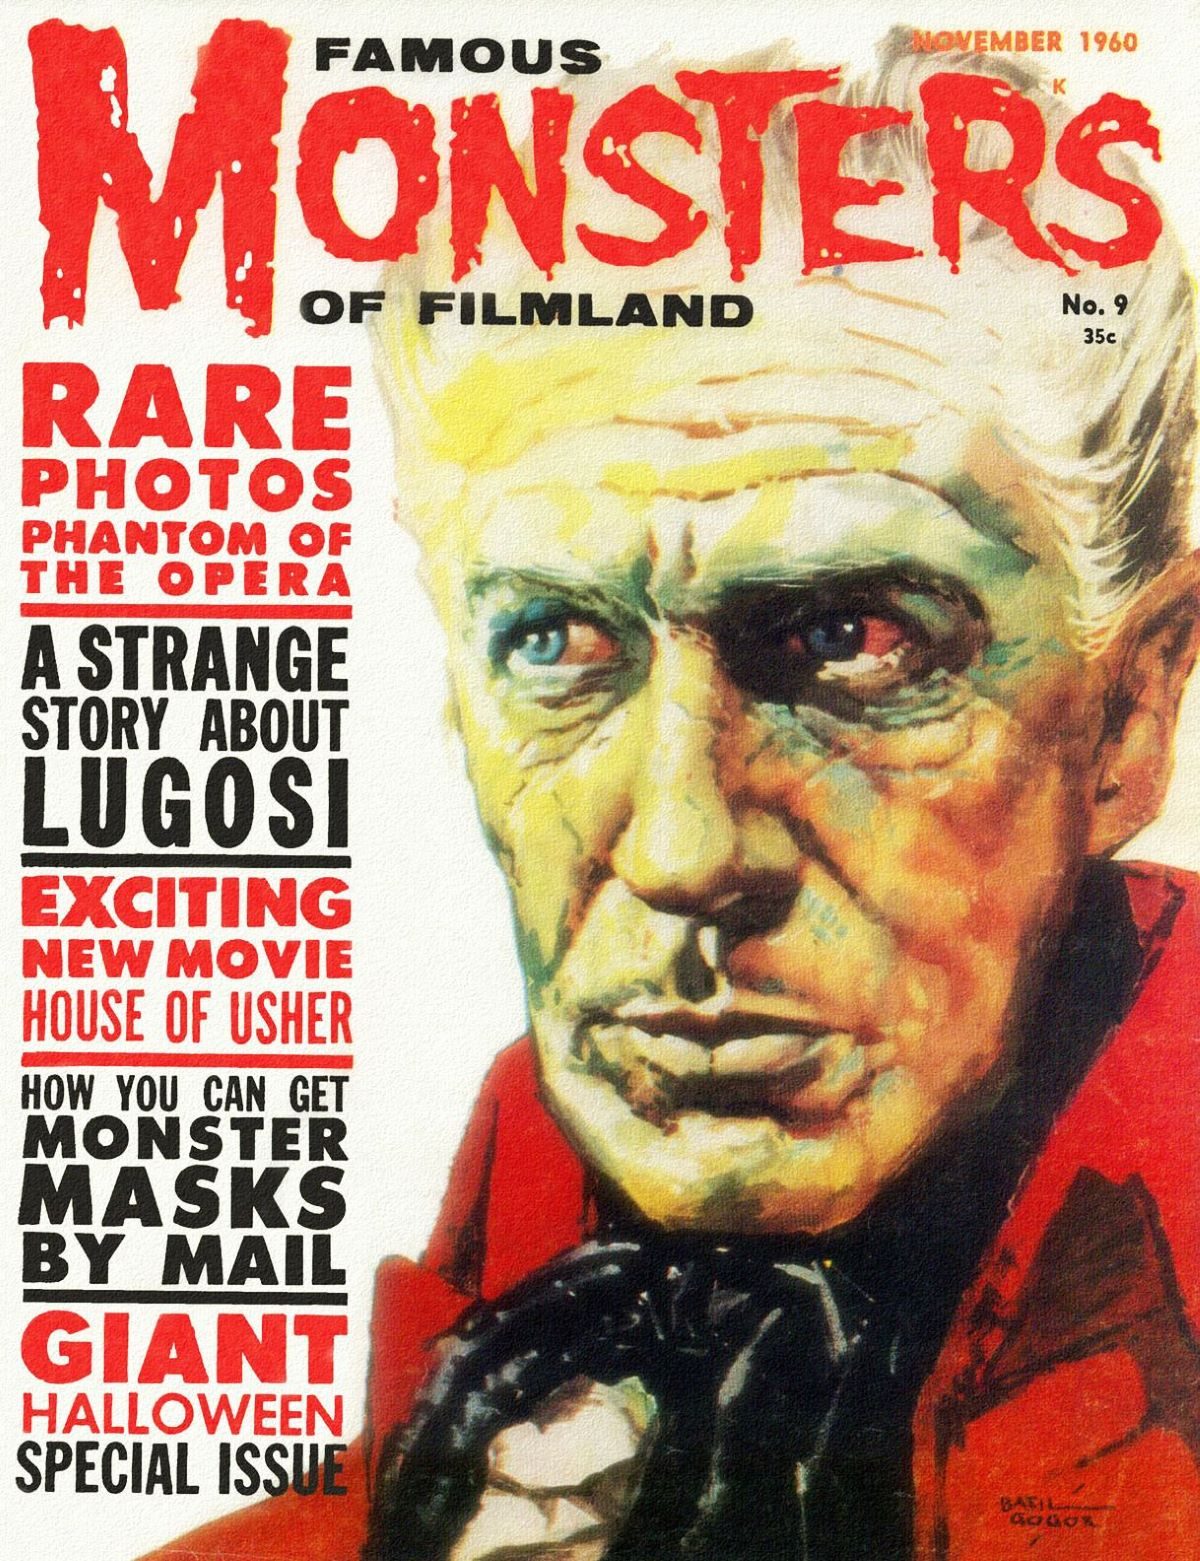 Famous Monsters of Filmland, magazine, horror films, Vincent Price, 1960s